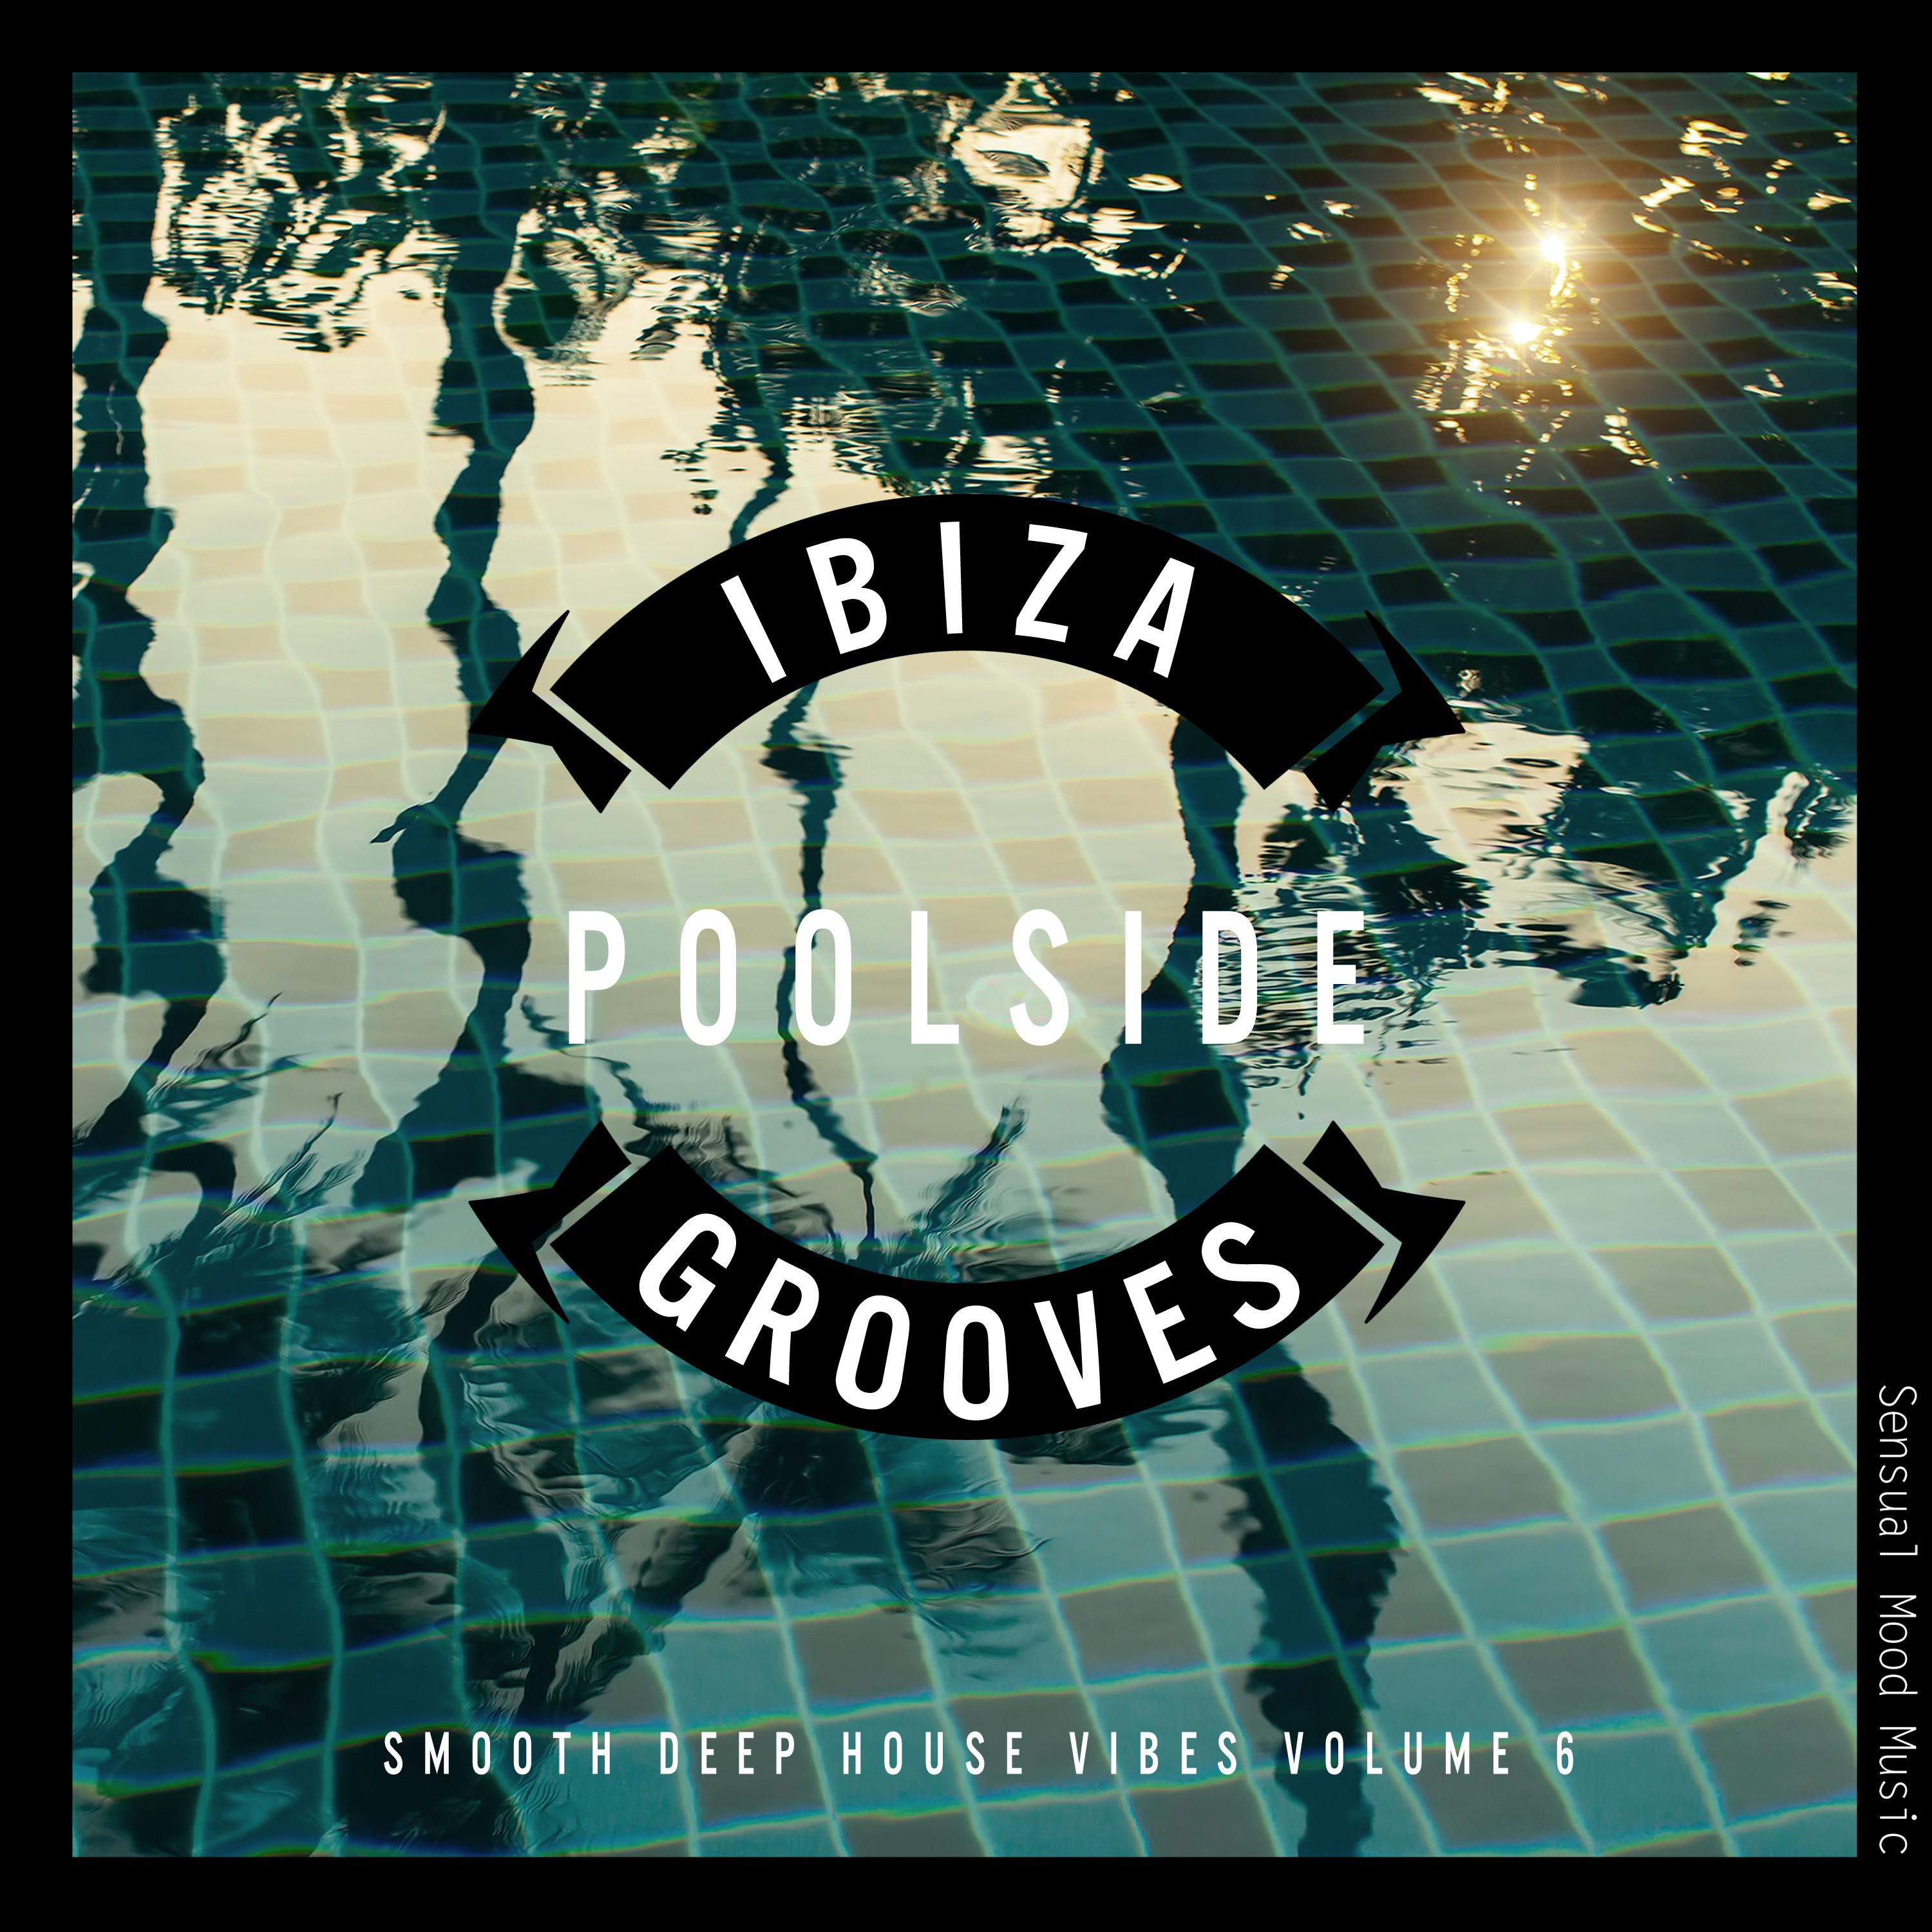 Ibiza Poolside Grooves, Vol. 6